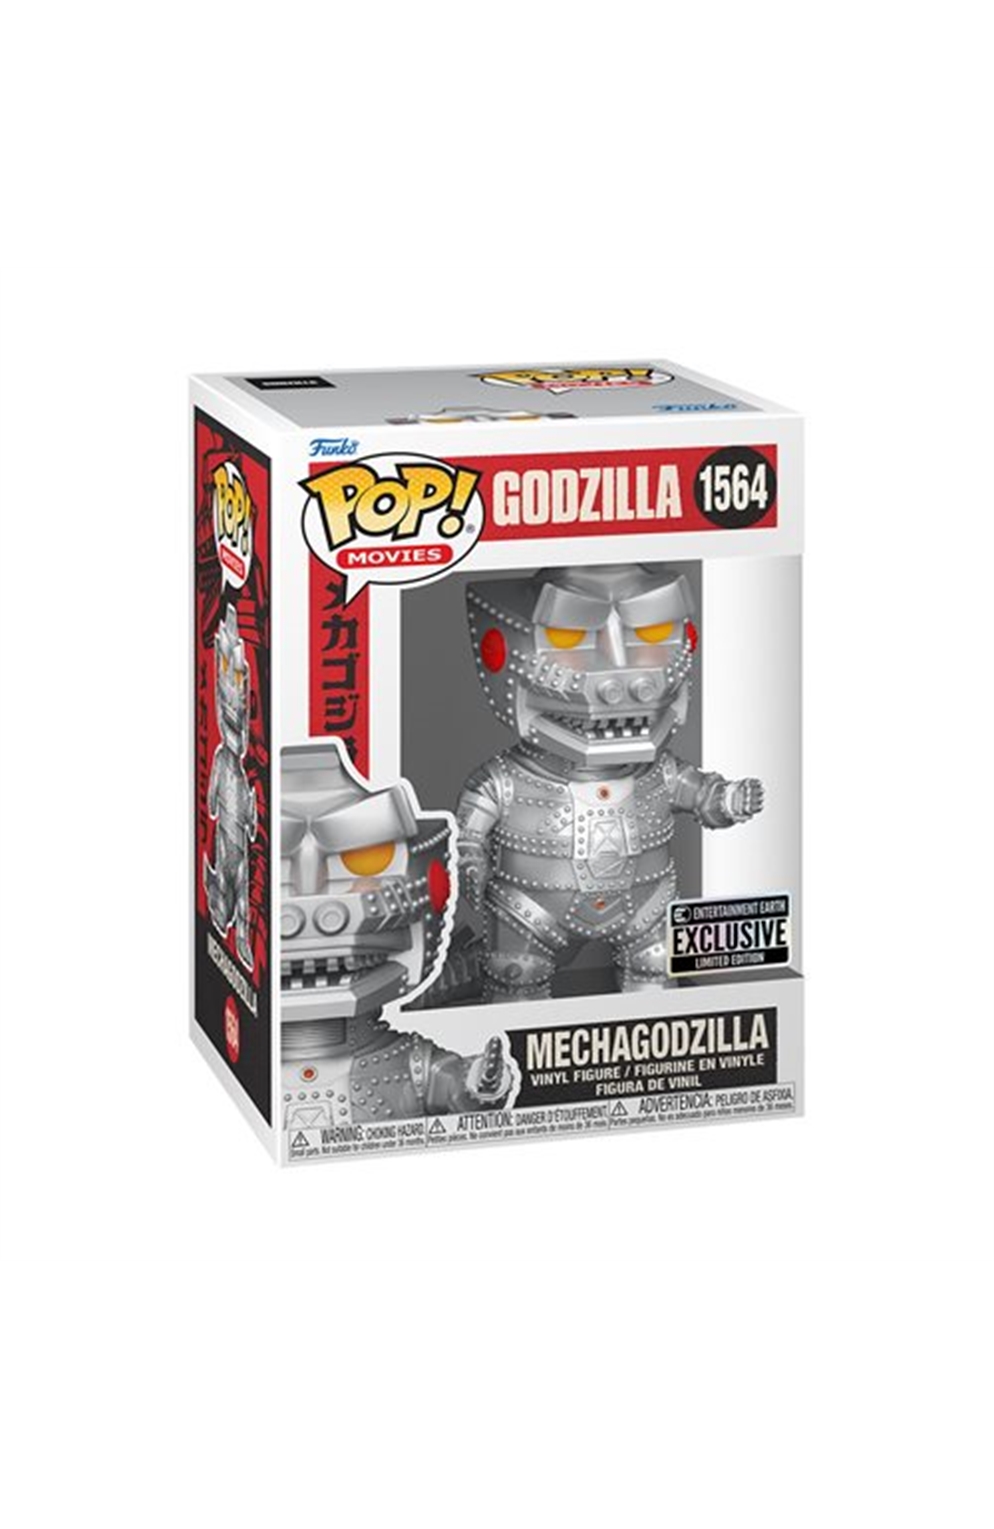 Godzilla Mechagodzilla Funko Pop! Vinyl Figure #1564 - Entertainment Earth Exclusive